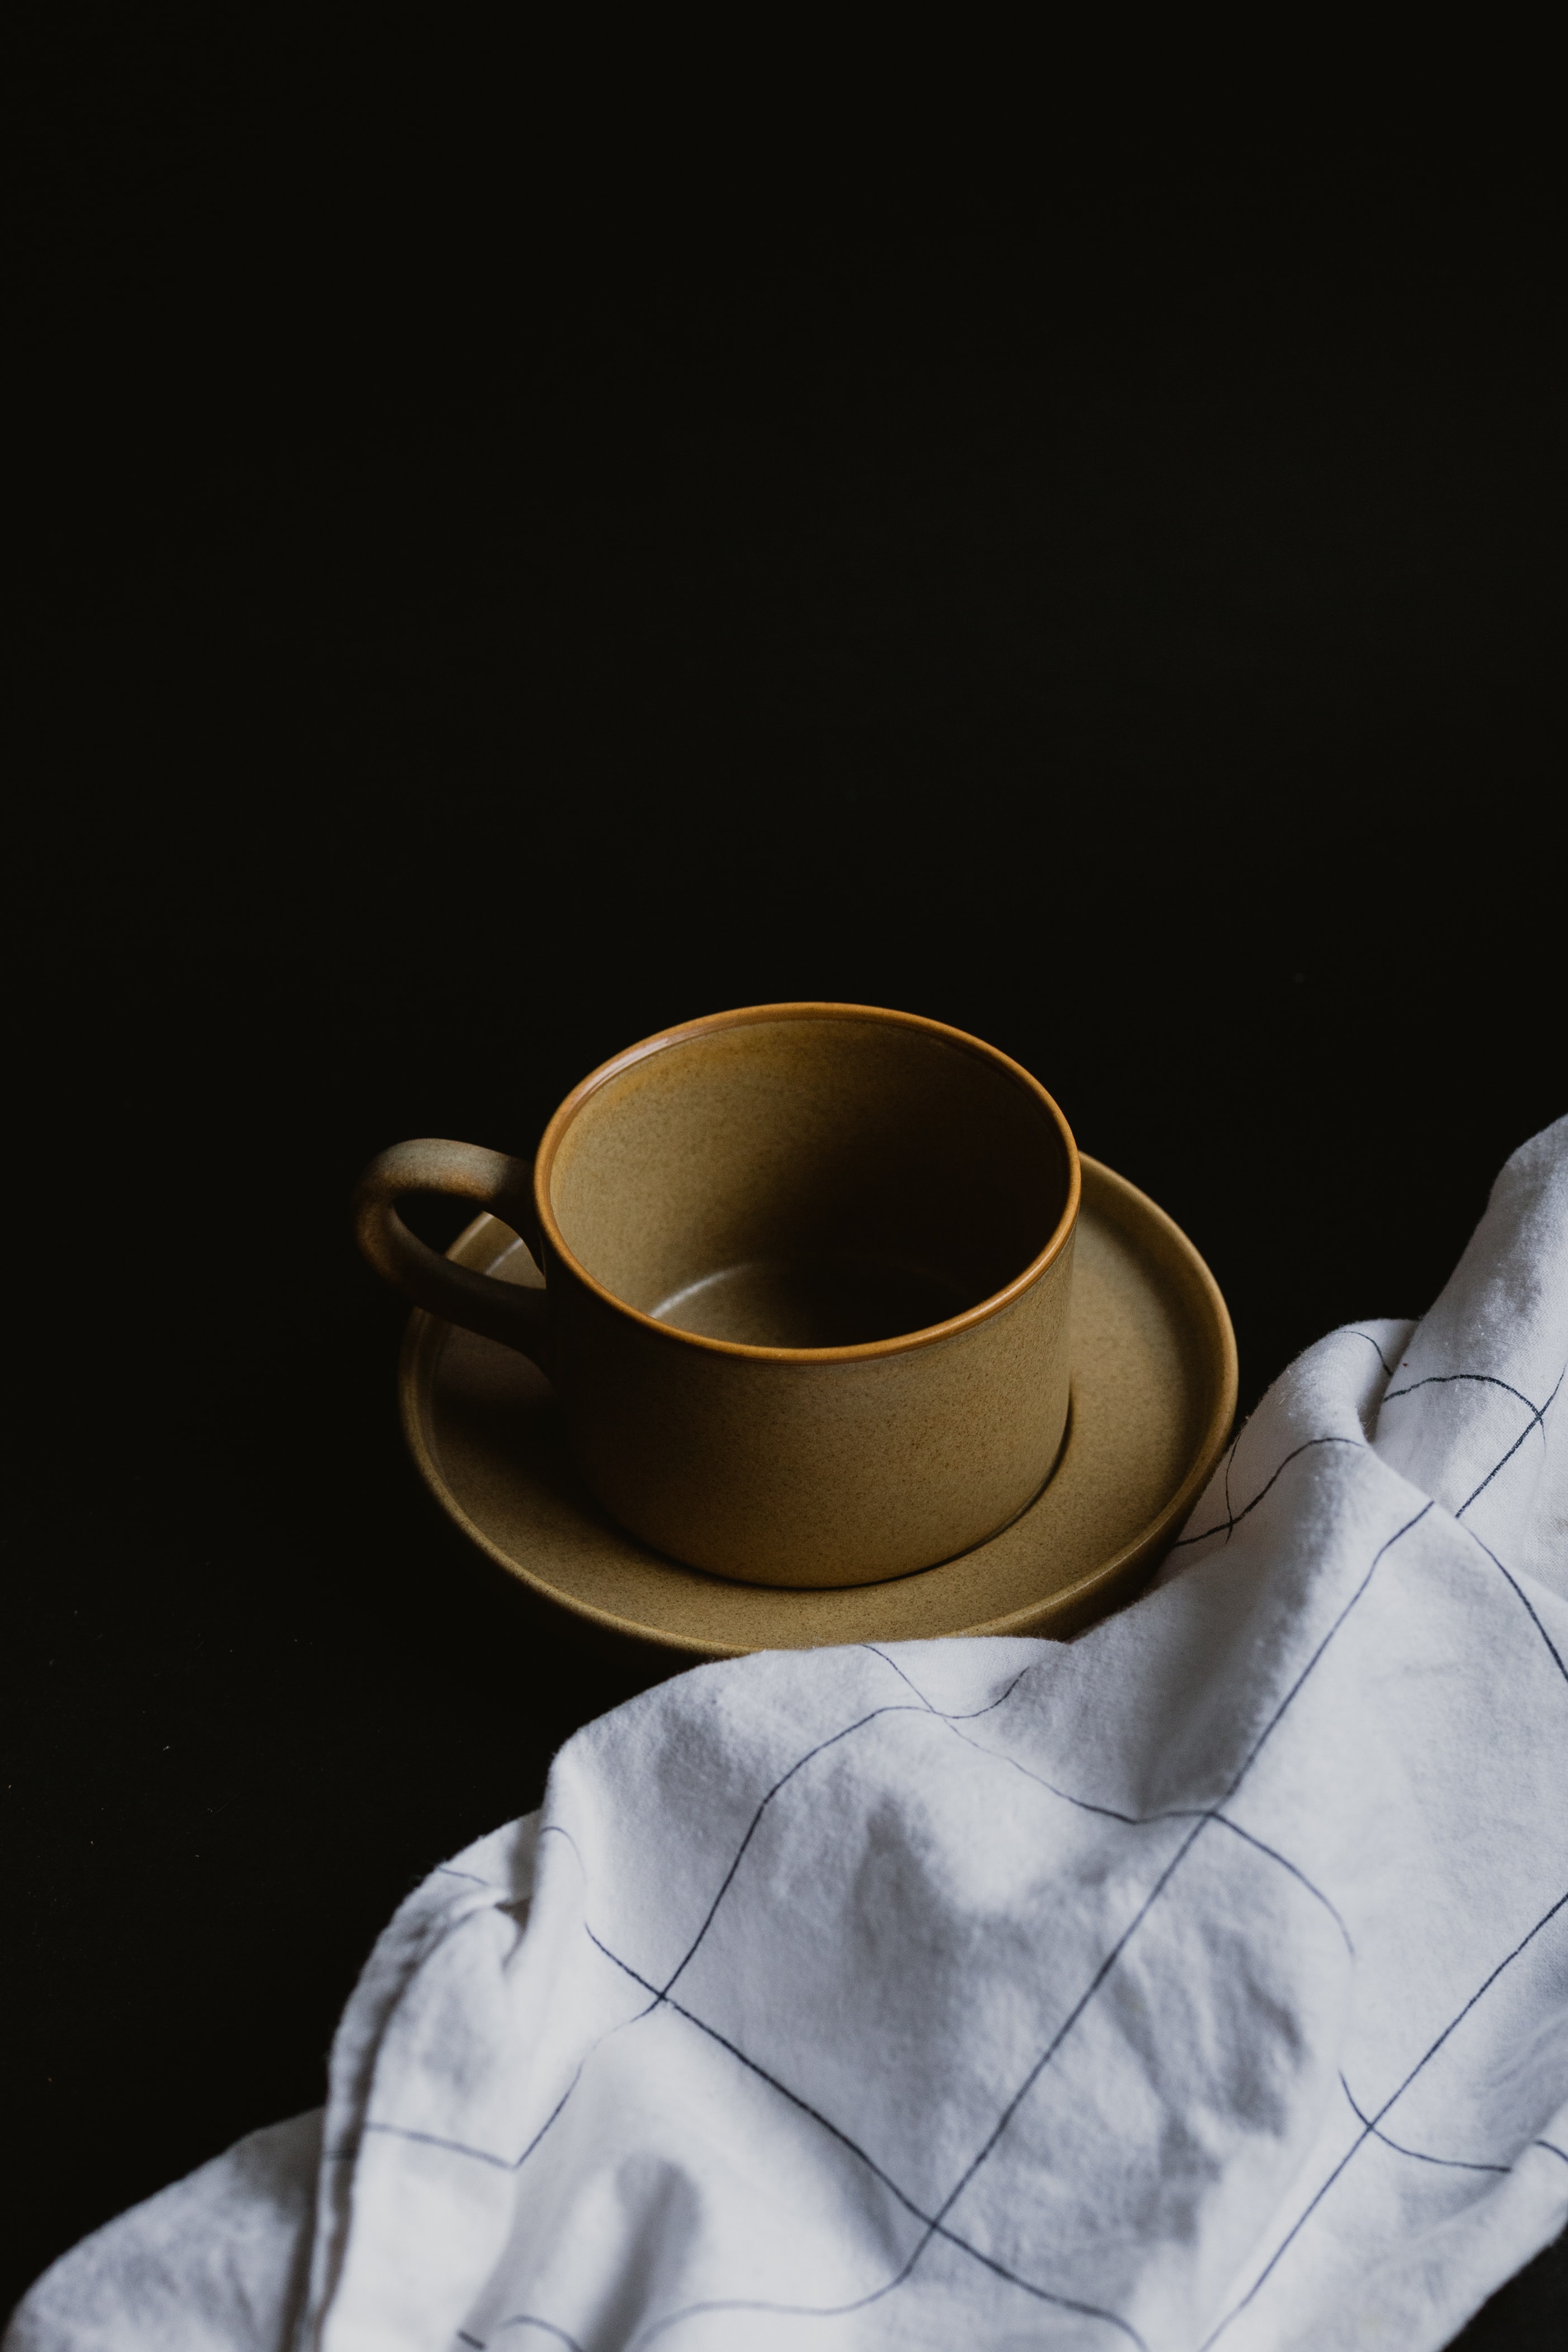 cloth, still life, miscellanea, miscellaneous, cup, plate, towel Image for desktop